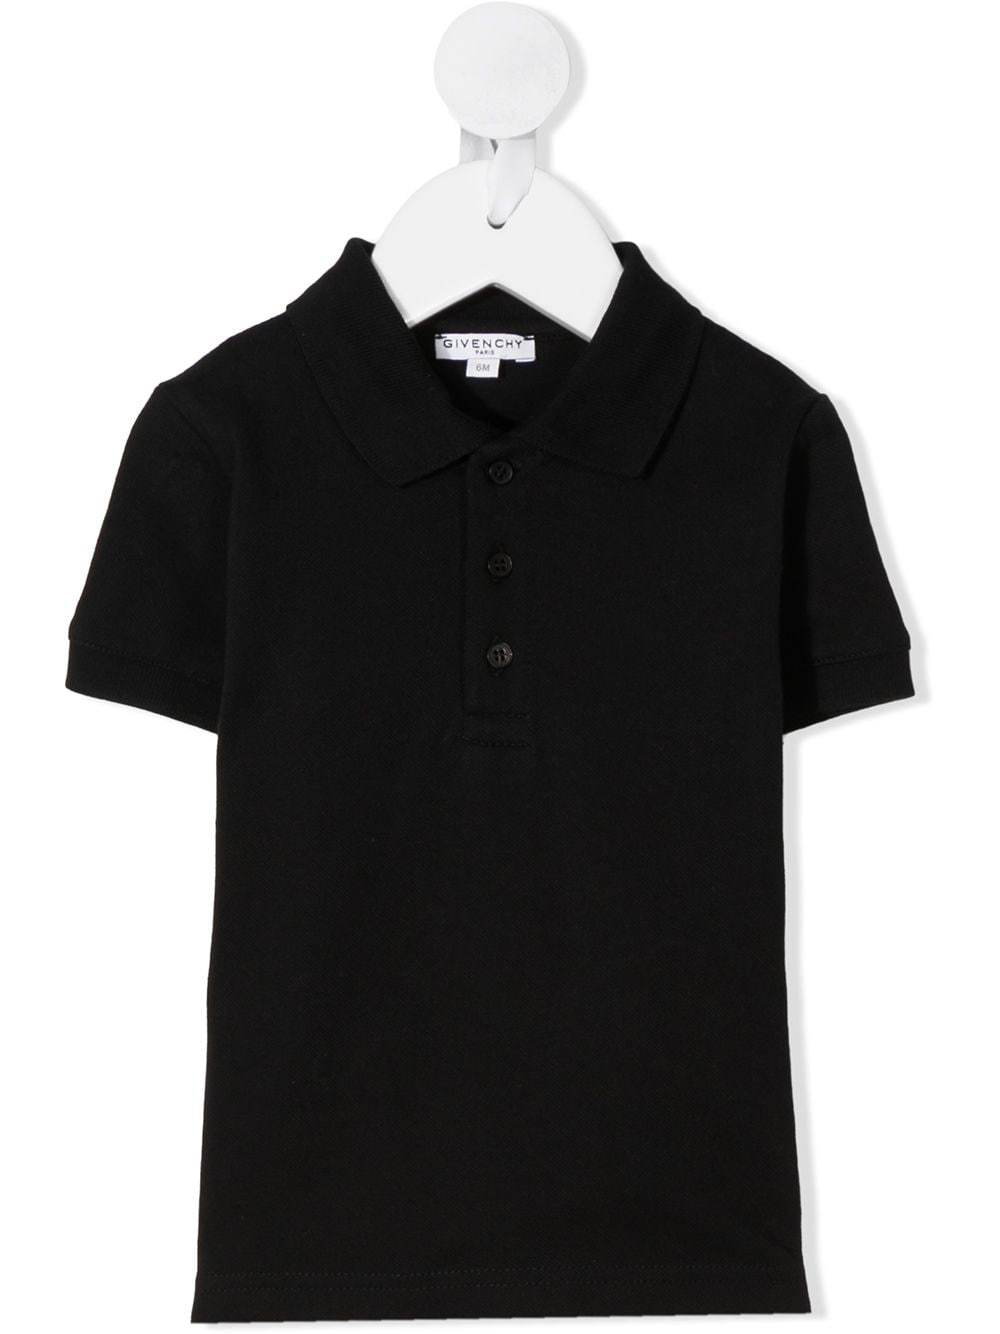 GIVENCHY KIDS Logo Polo Shirt Black - Maison De Fashion 